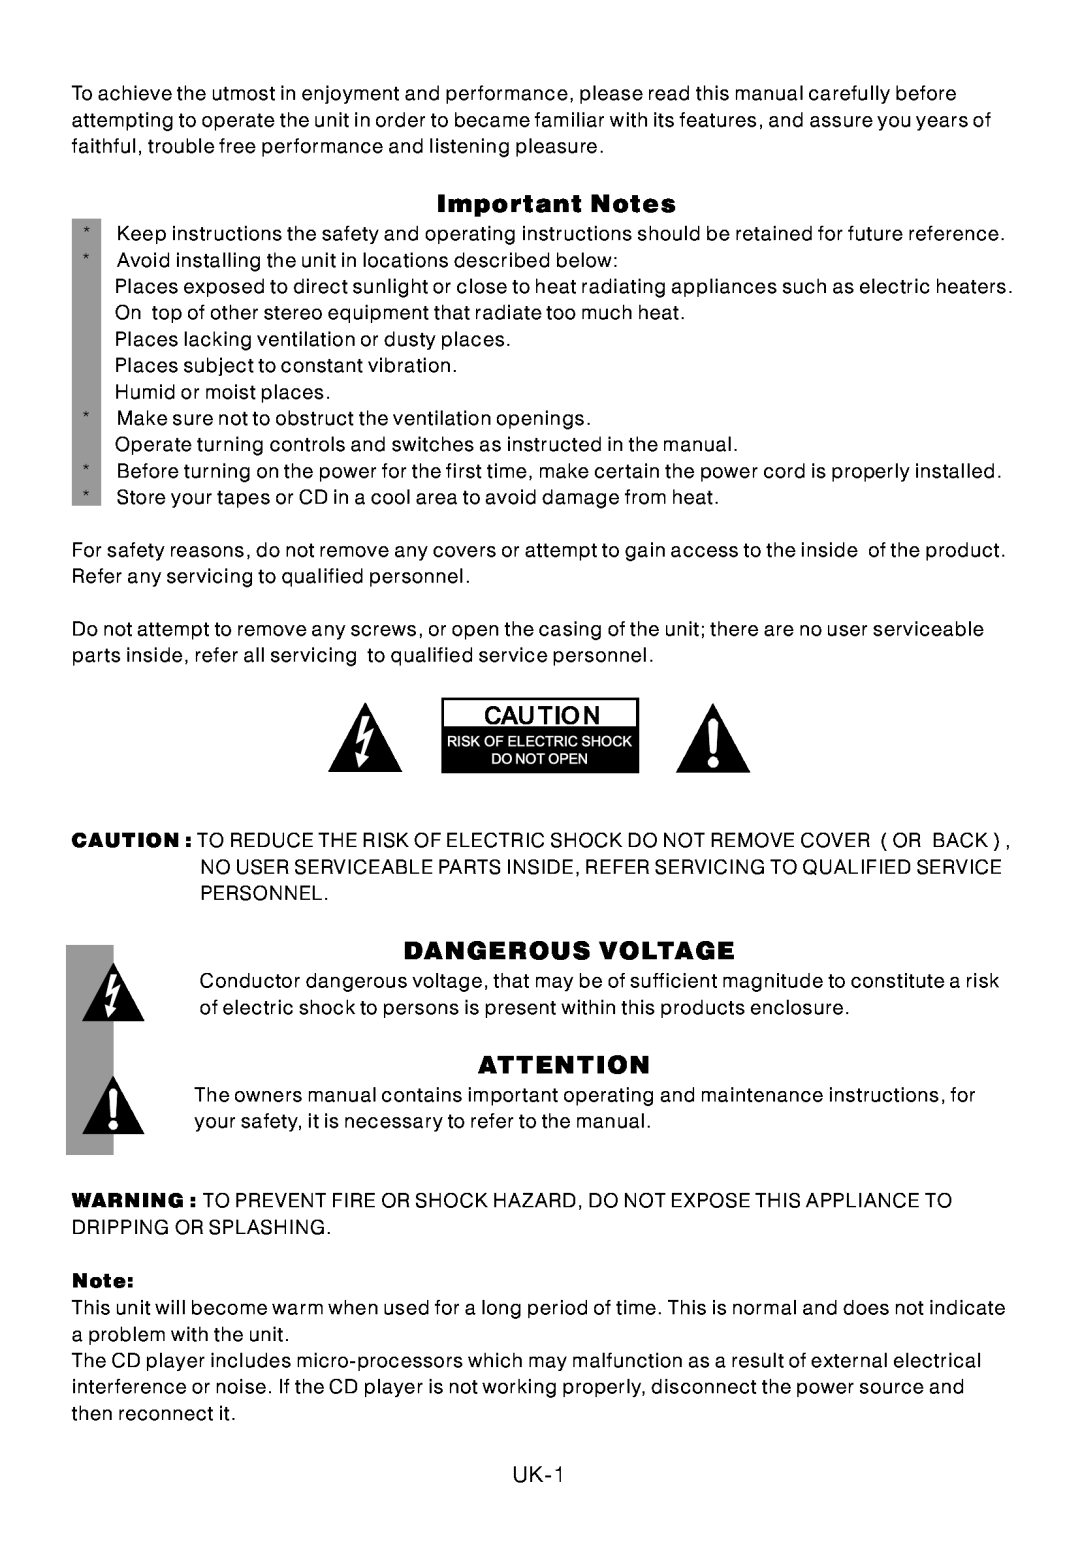 Motorola BSA-1520 instruction manual UK-1, Important Notes, Dangerous Voltage 